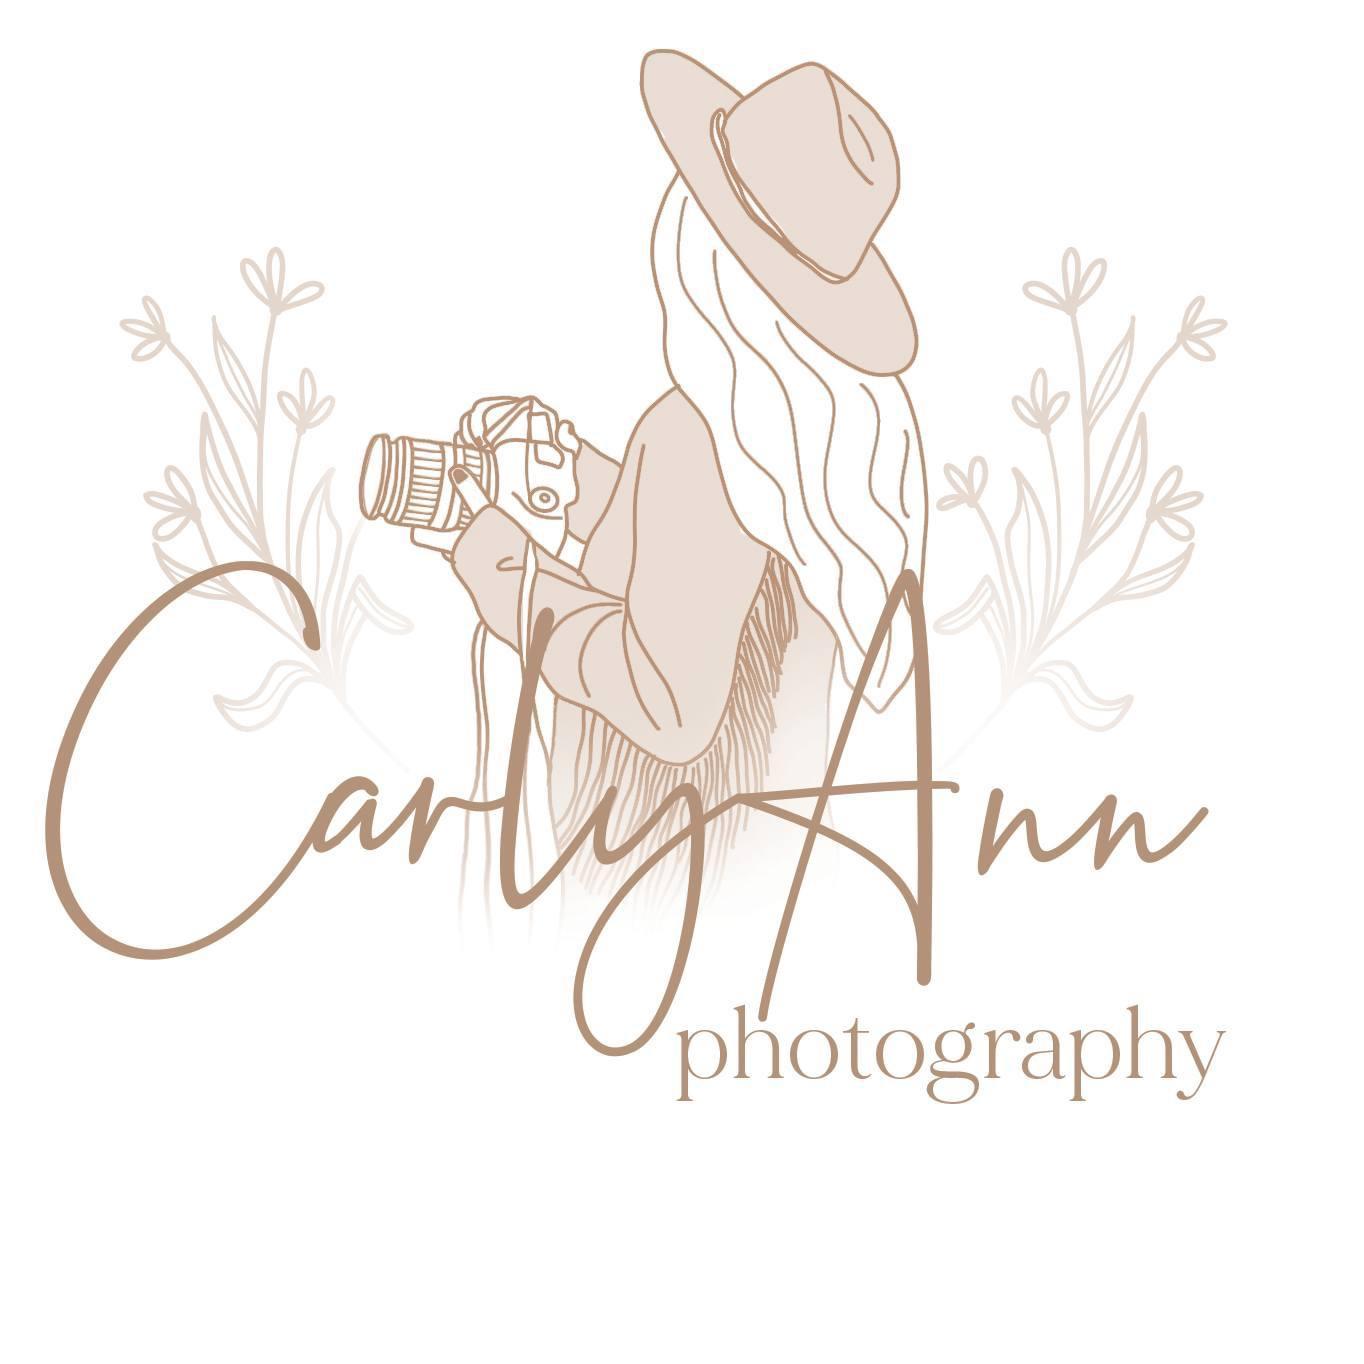 Carly Ann Photography